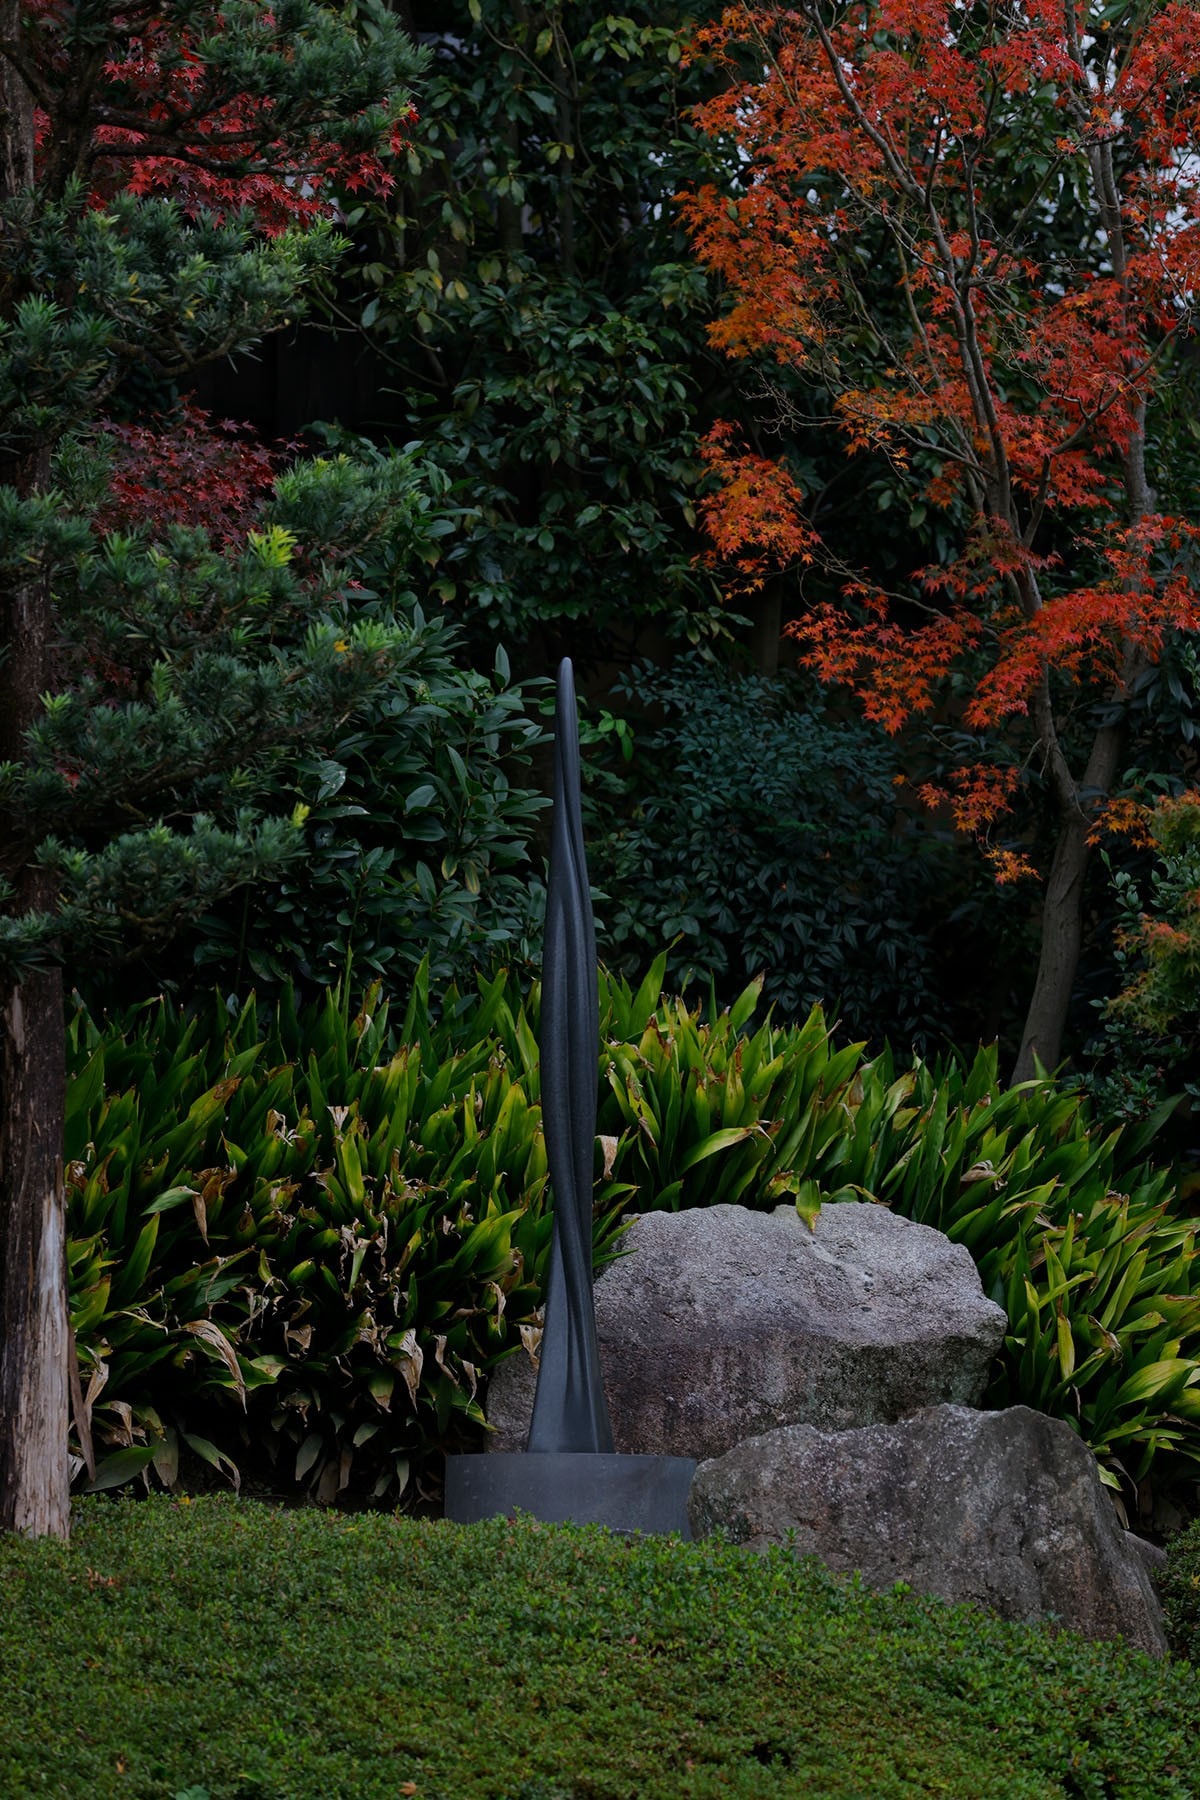 kyoto taiga takahashi retrospective t.t gion exhibition tea ceremony beauty sculpture archive hosoo gallery